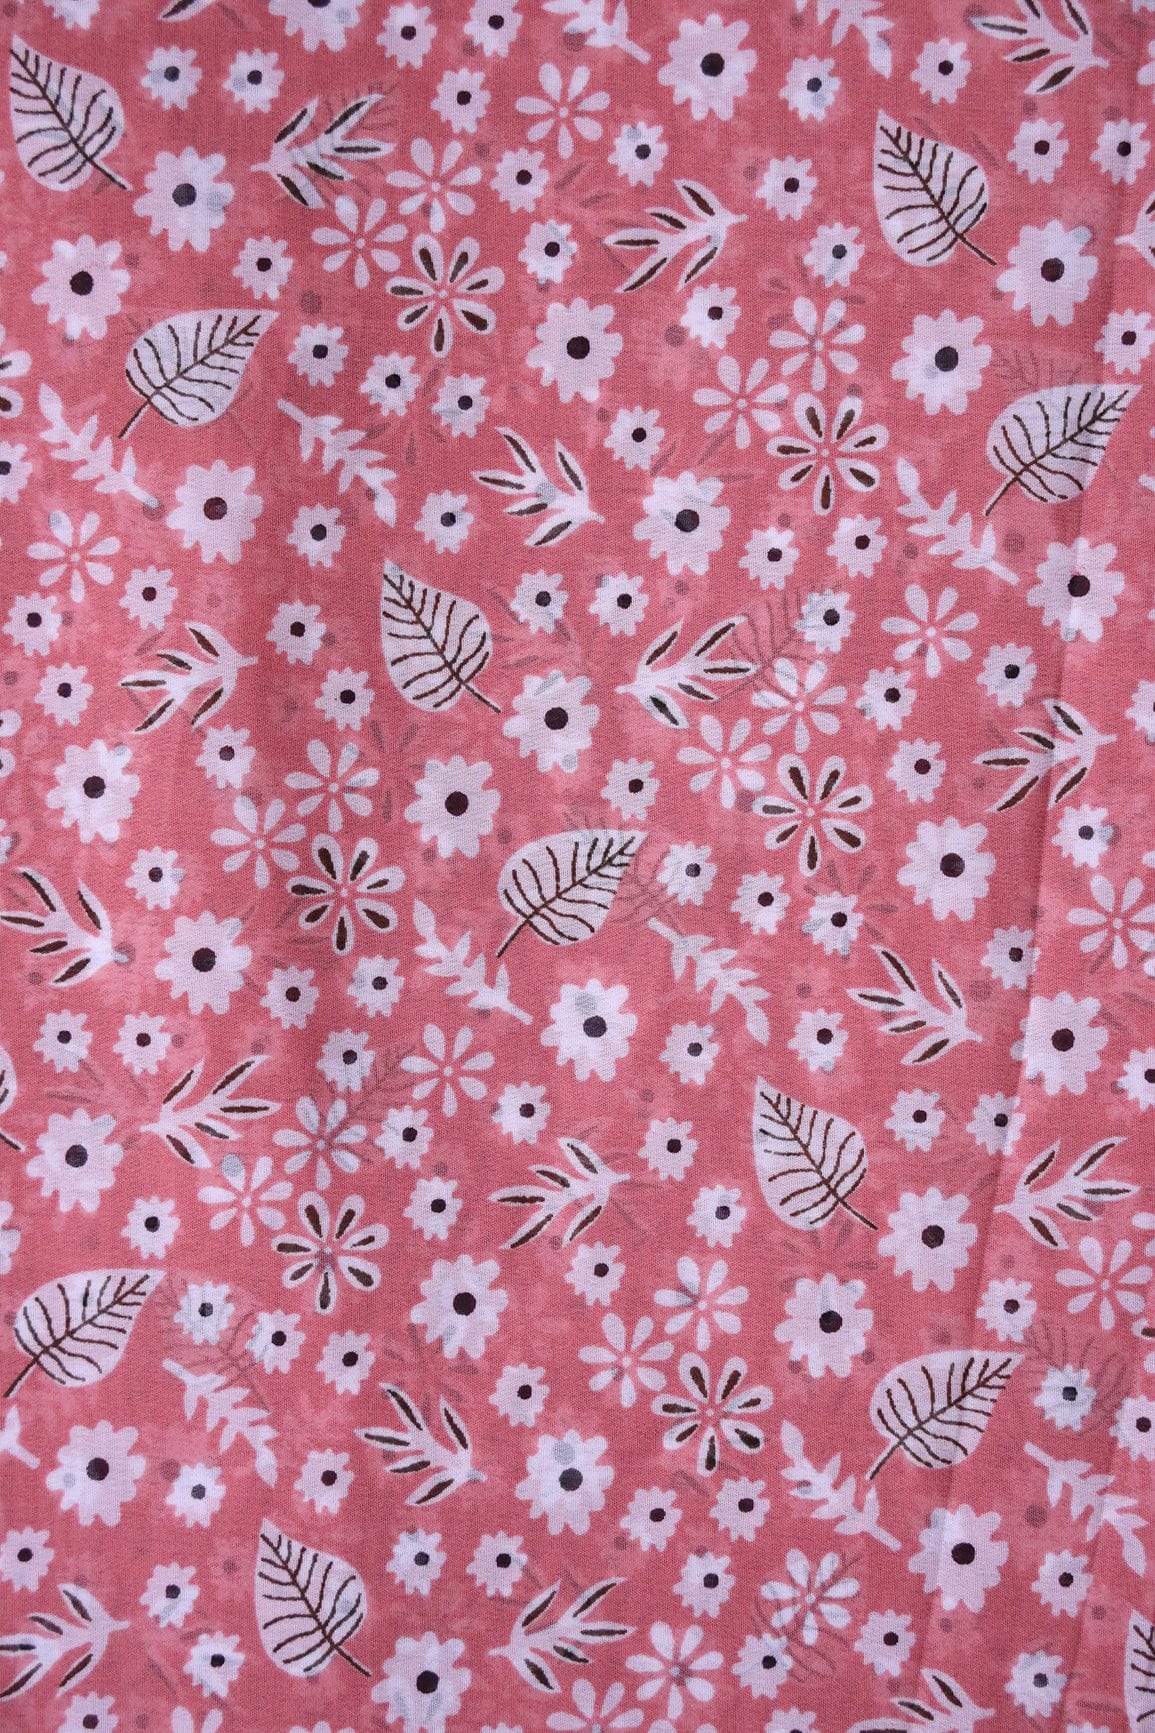 doeraa Prints Big Width "56" White Small Floral Digital Print On Gajri Pink Georgette Fabric